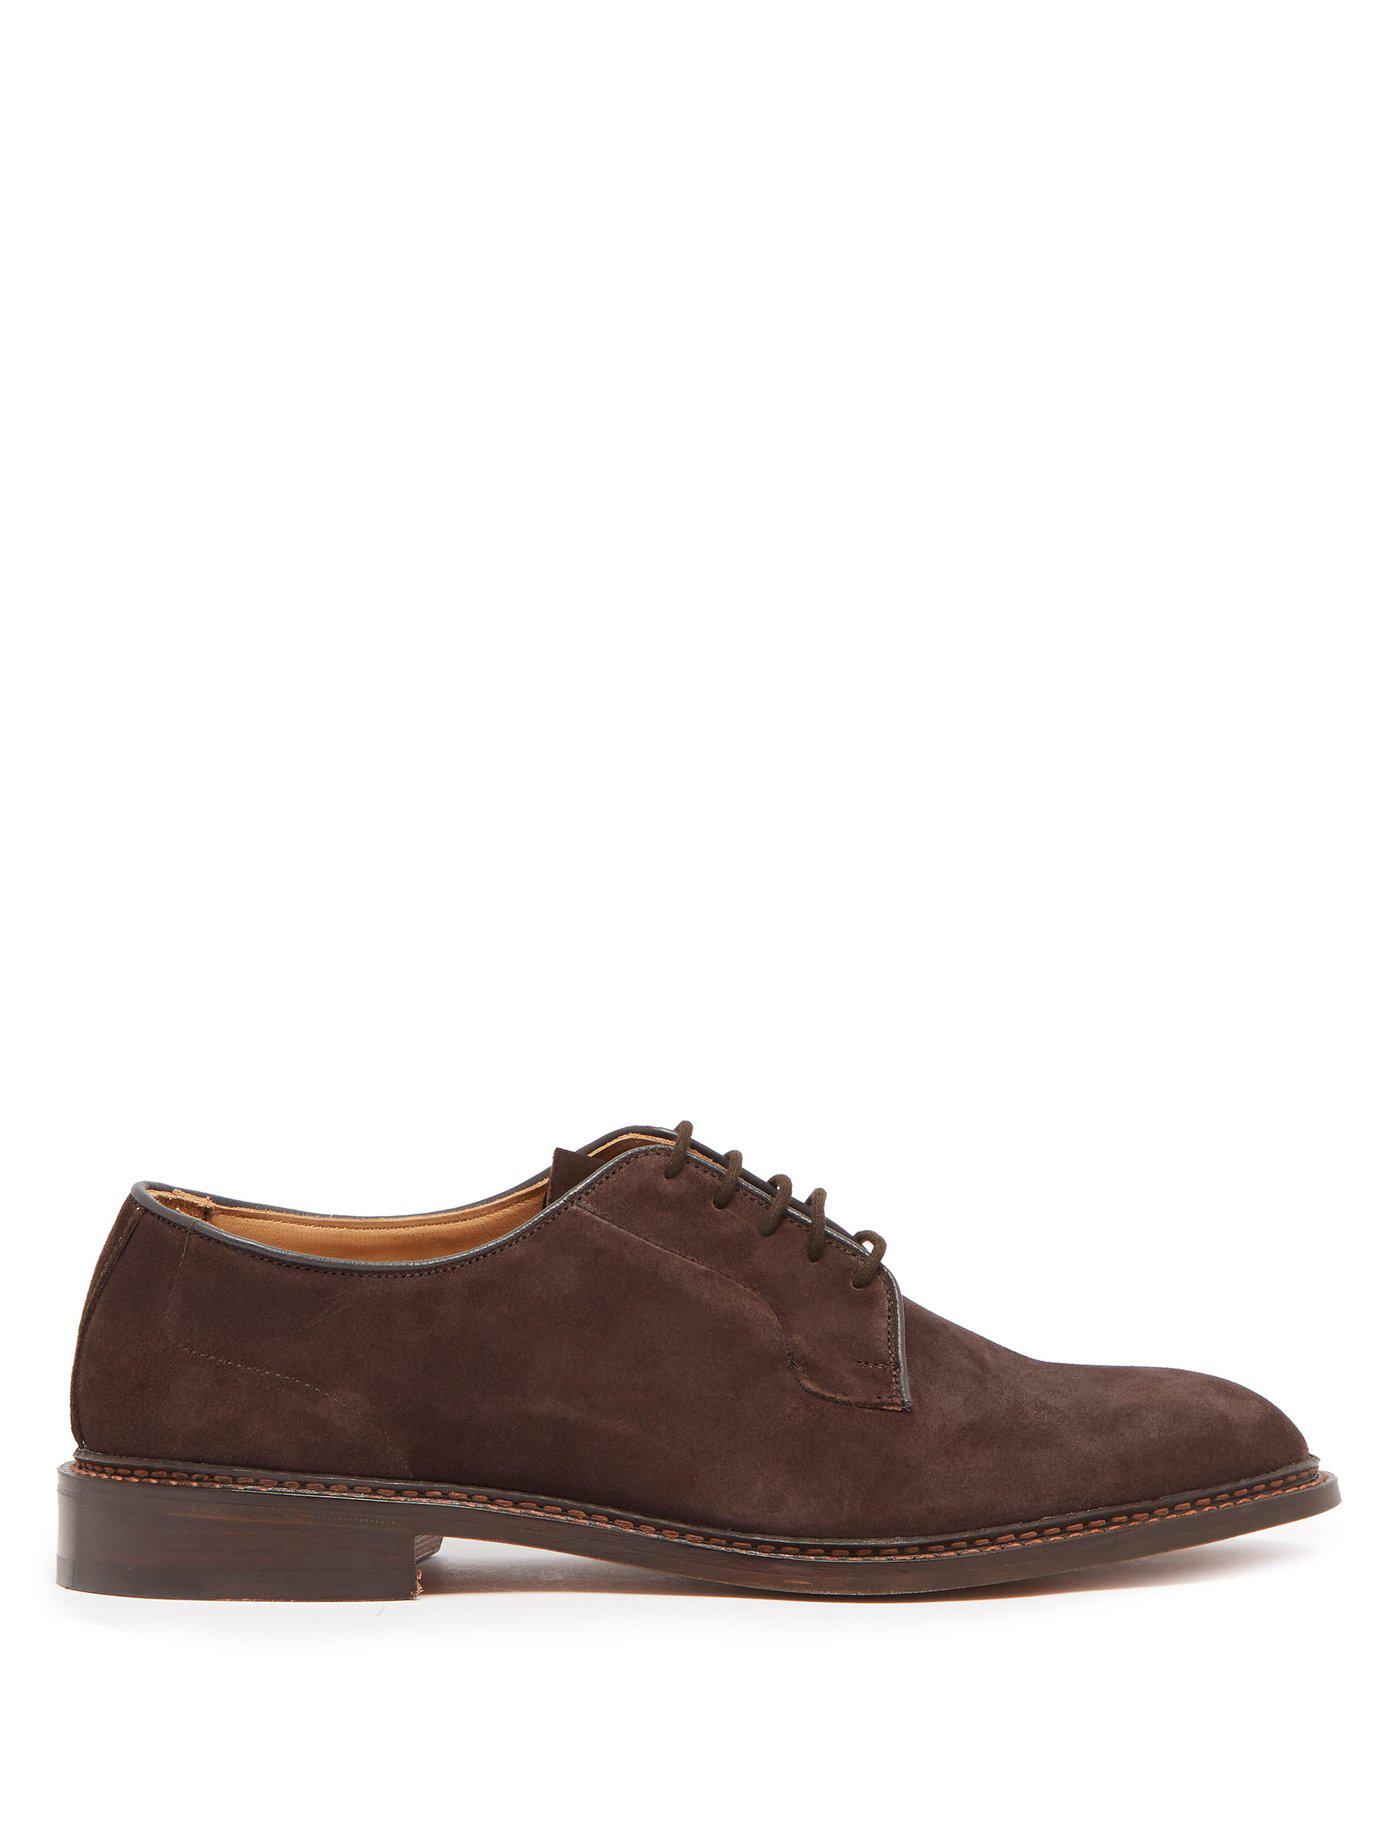 Lyst - Tricker'S Robert Suede Derby Shoes in Brown for Men